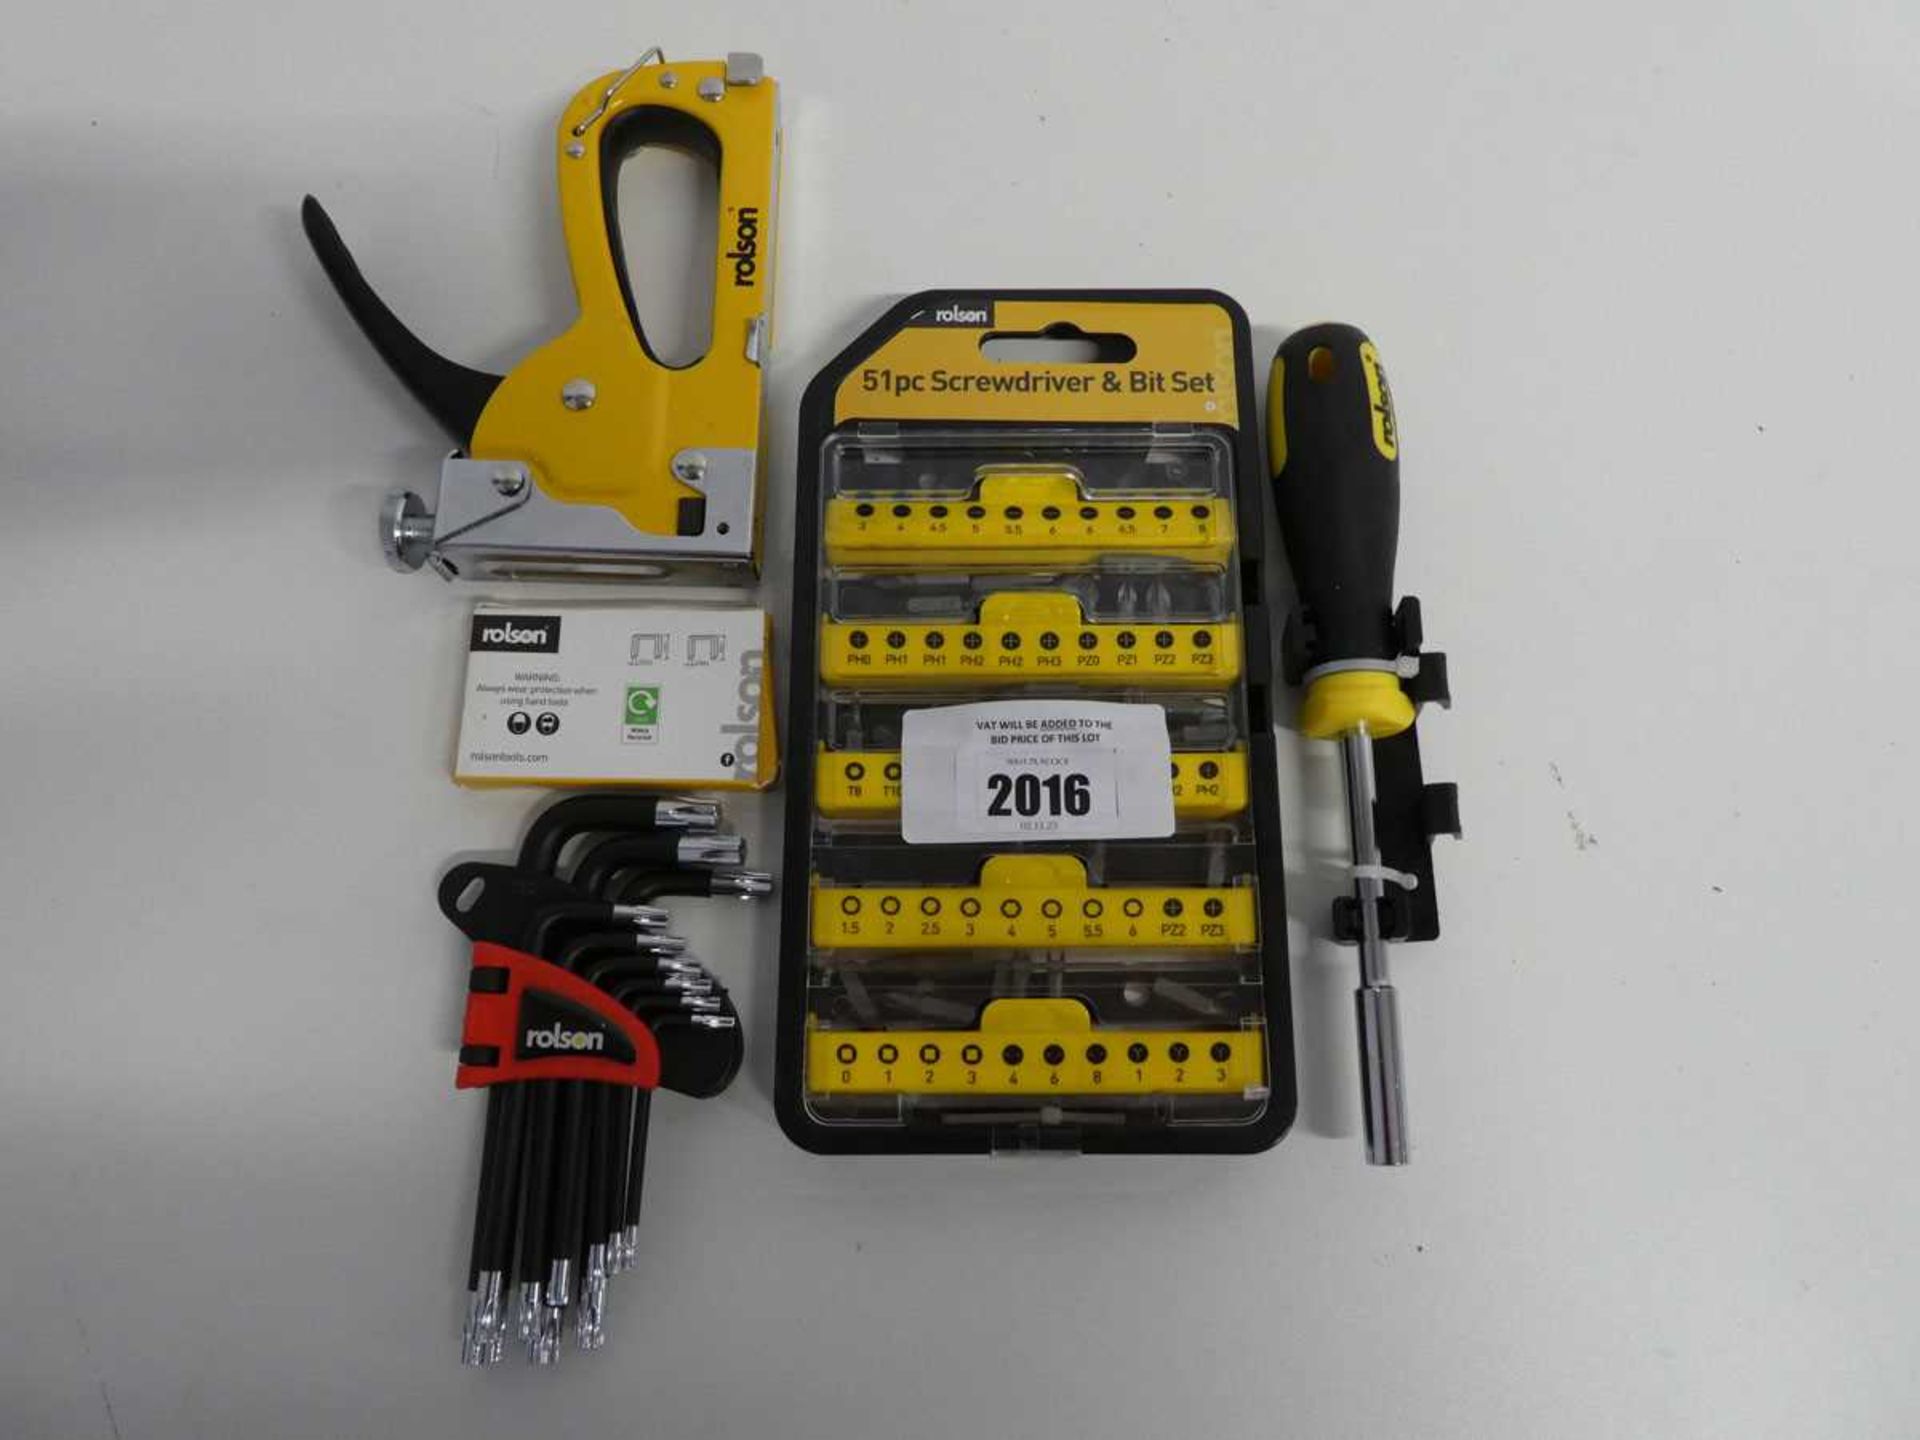 +VAT Set of Rolson tools incl. screwdriver, 51 piece screwdriving bit set, Allen keys and staple